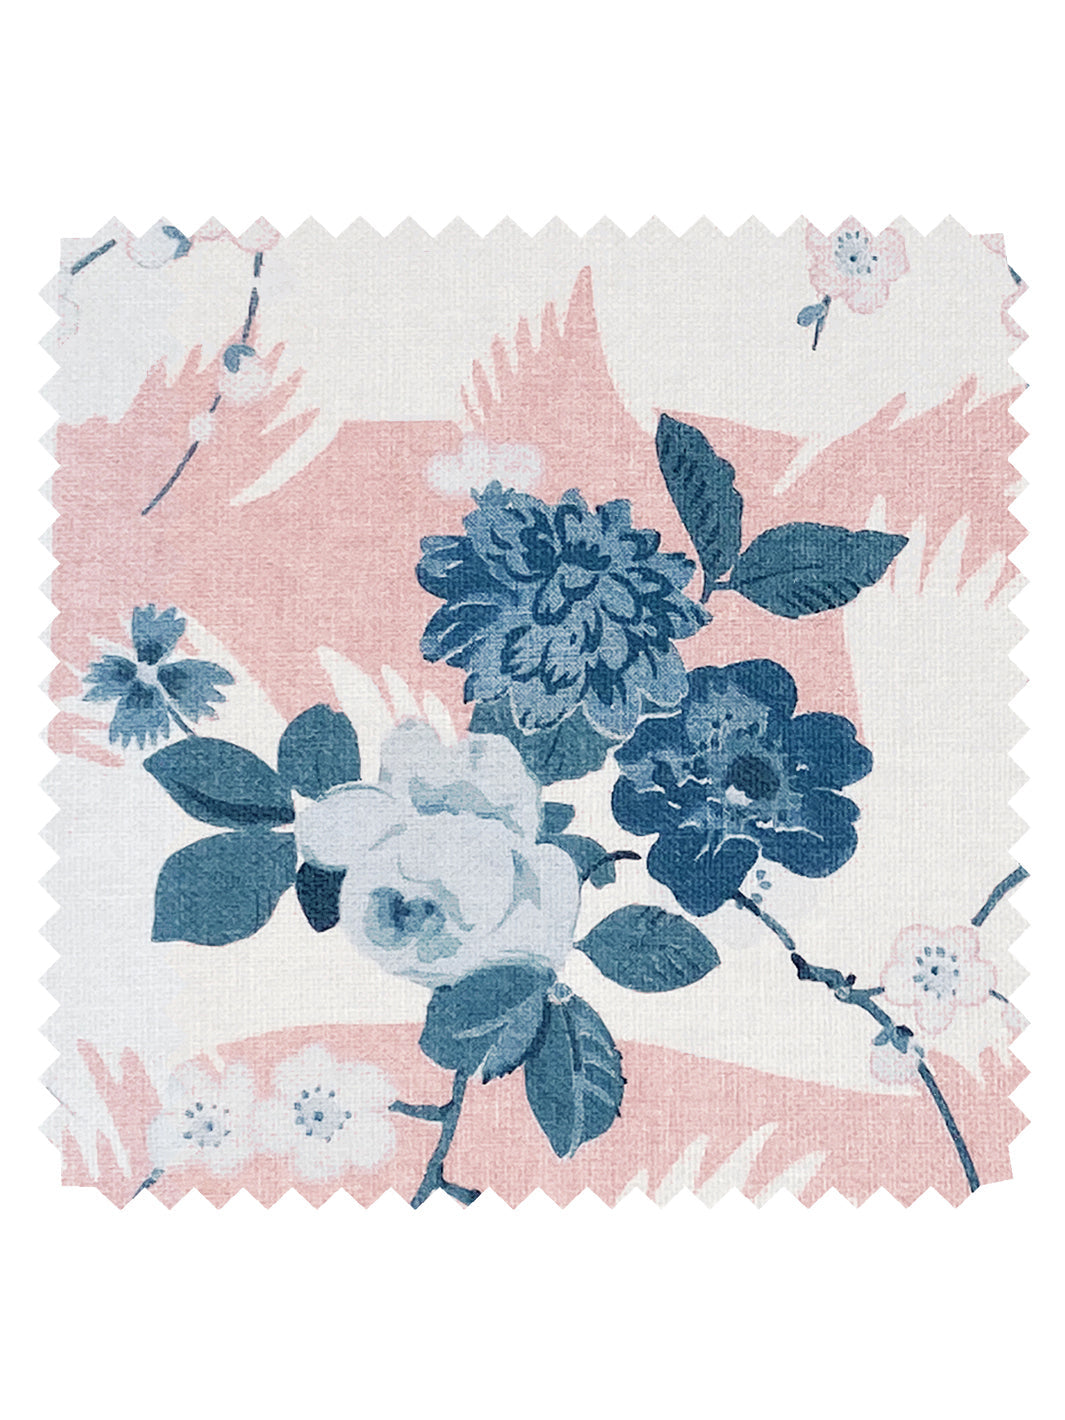 'Dora Chintz' Linen Fabric by Nathan Turner - Shell Blue